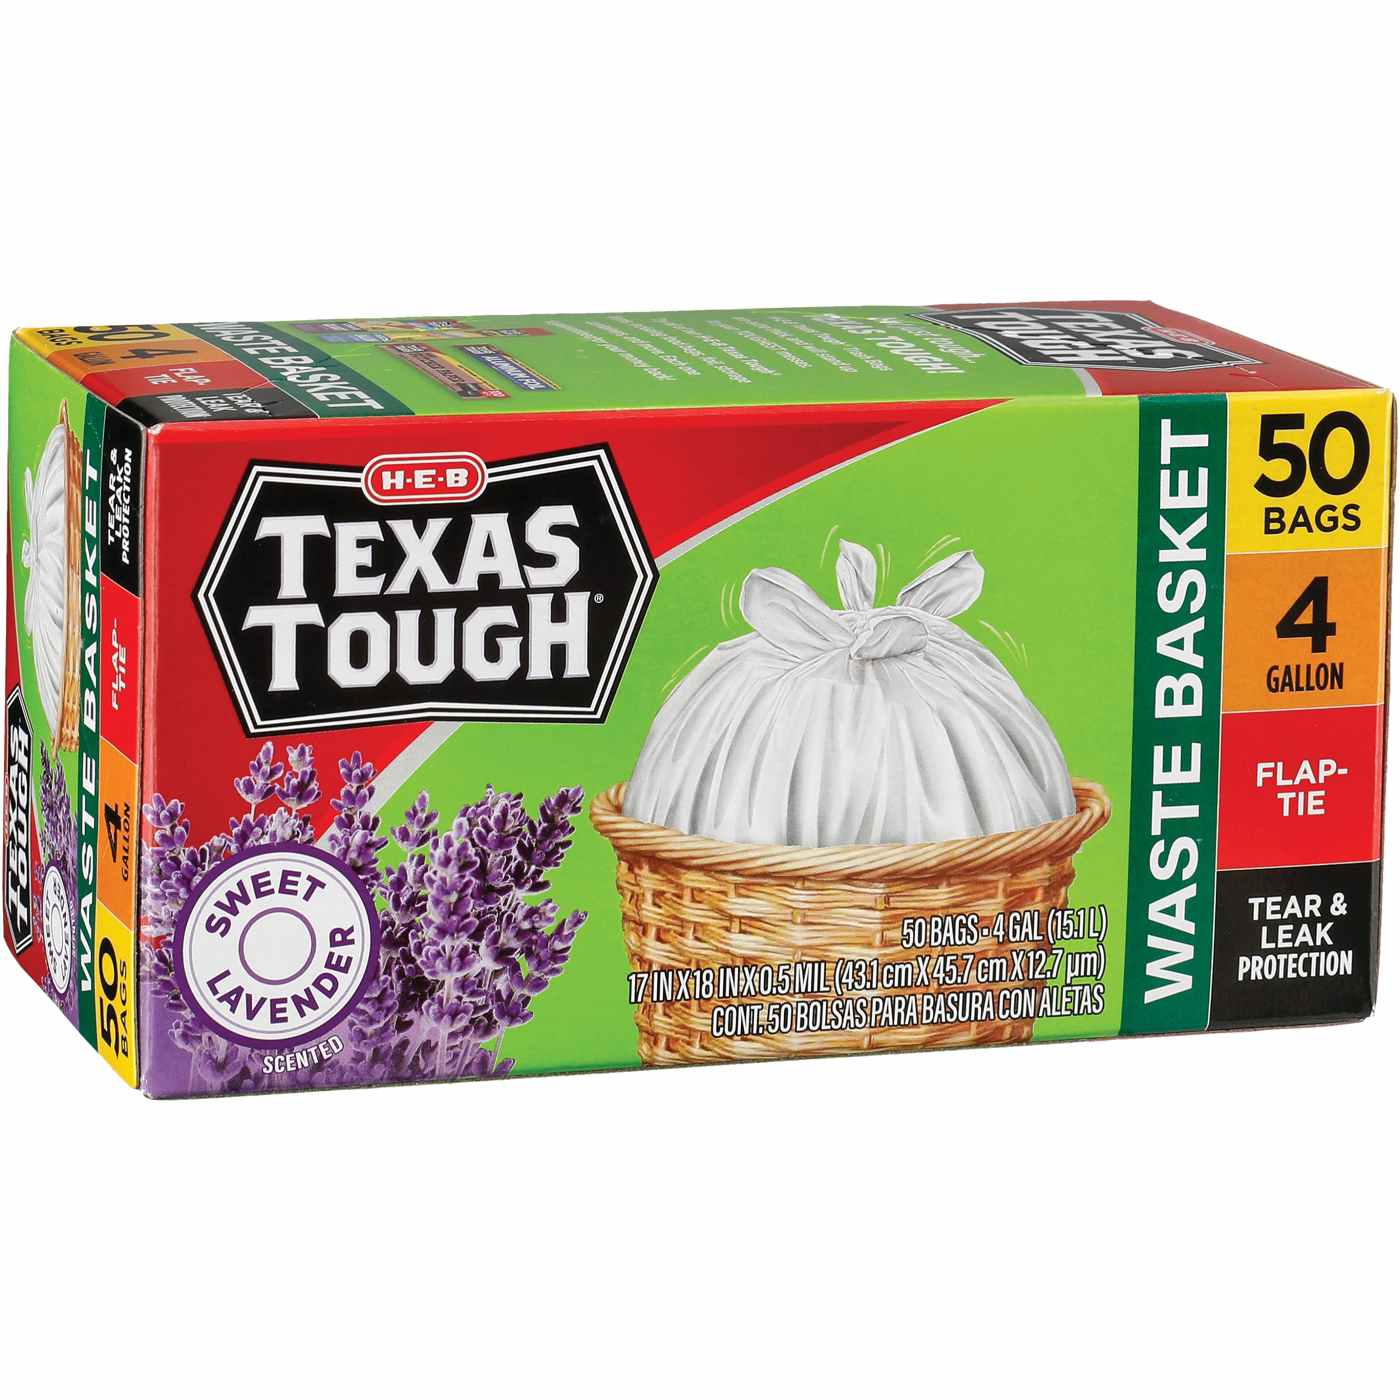 H-E-B Texas Tough Flap Tie Waste Basket Trash Bags, 4 Gallon - Sweet  Lavender Scent